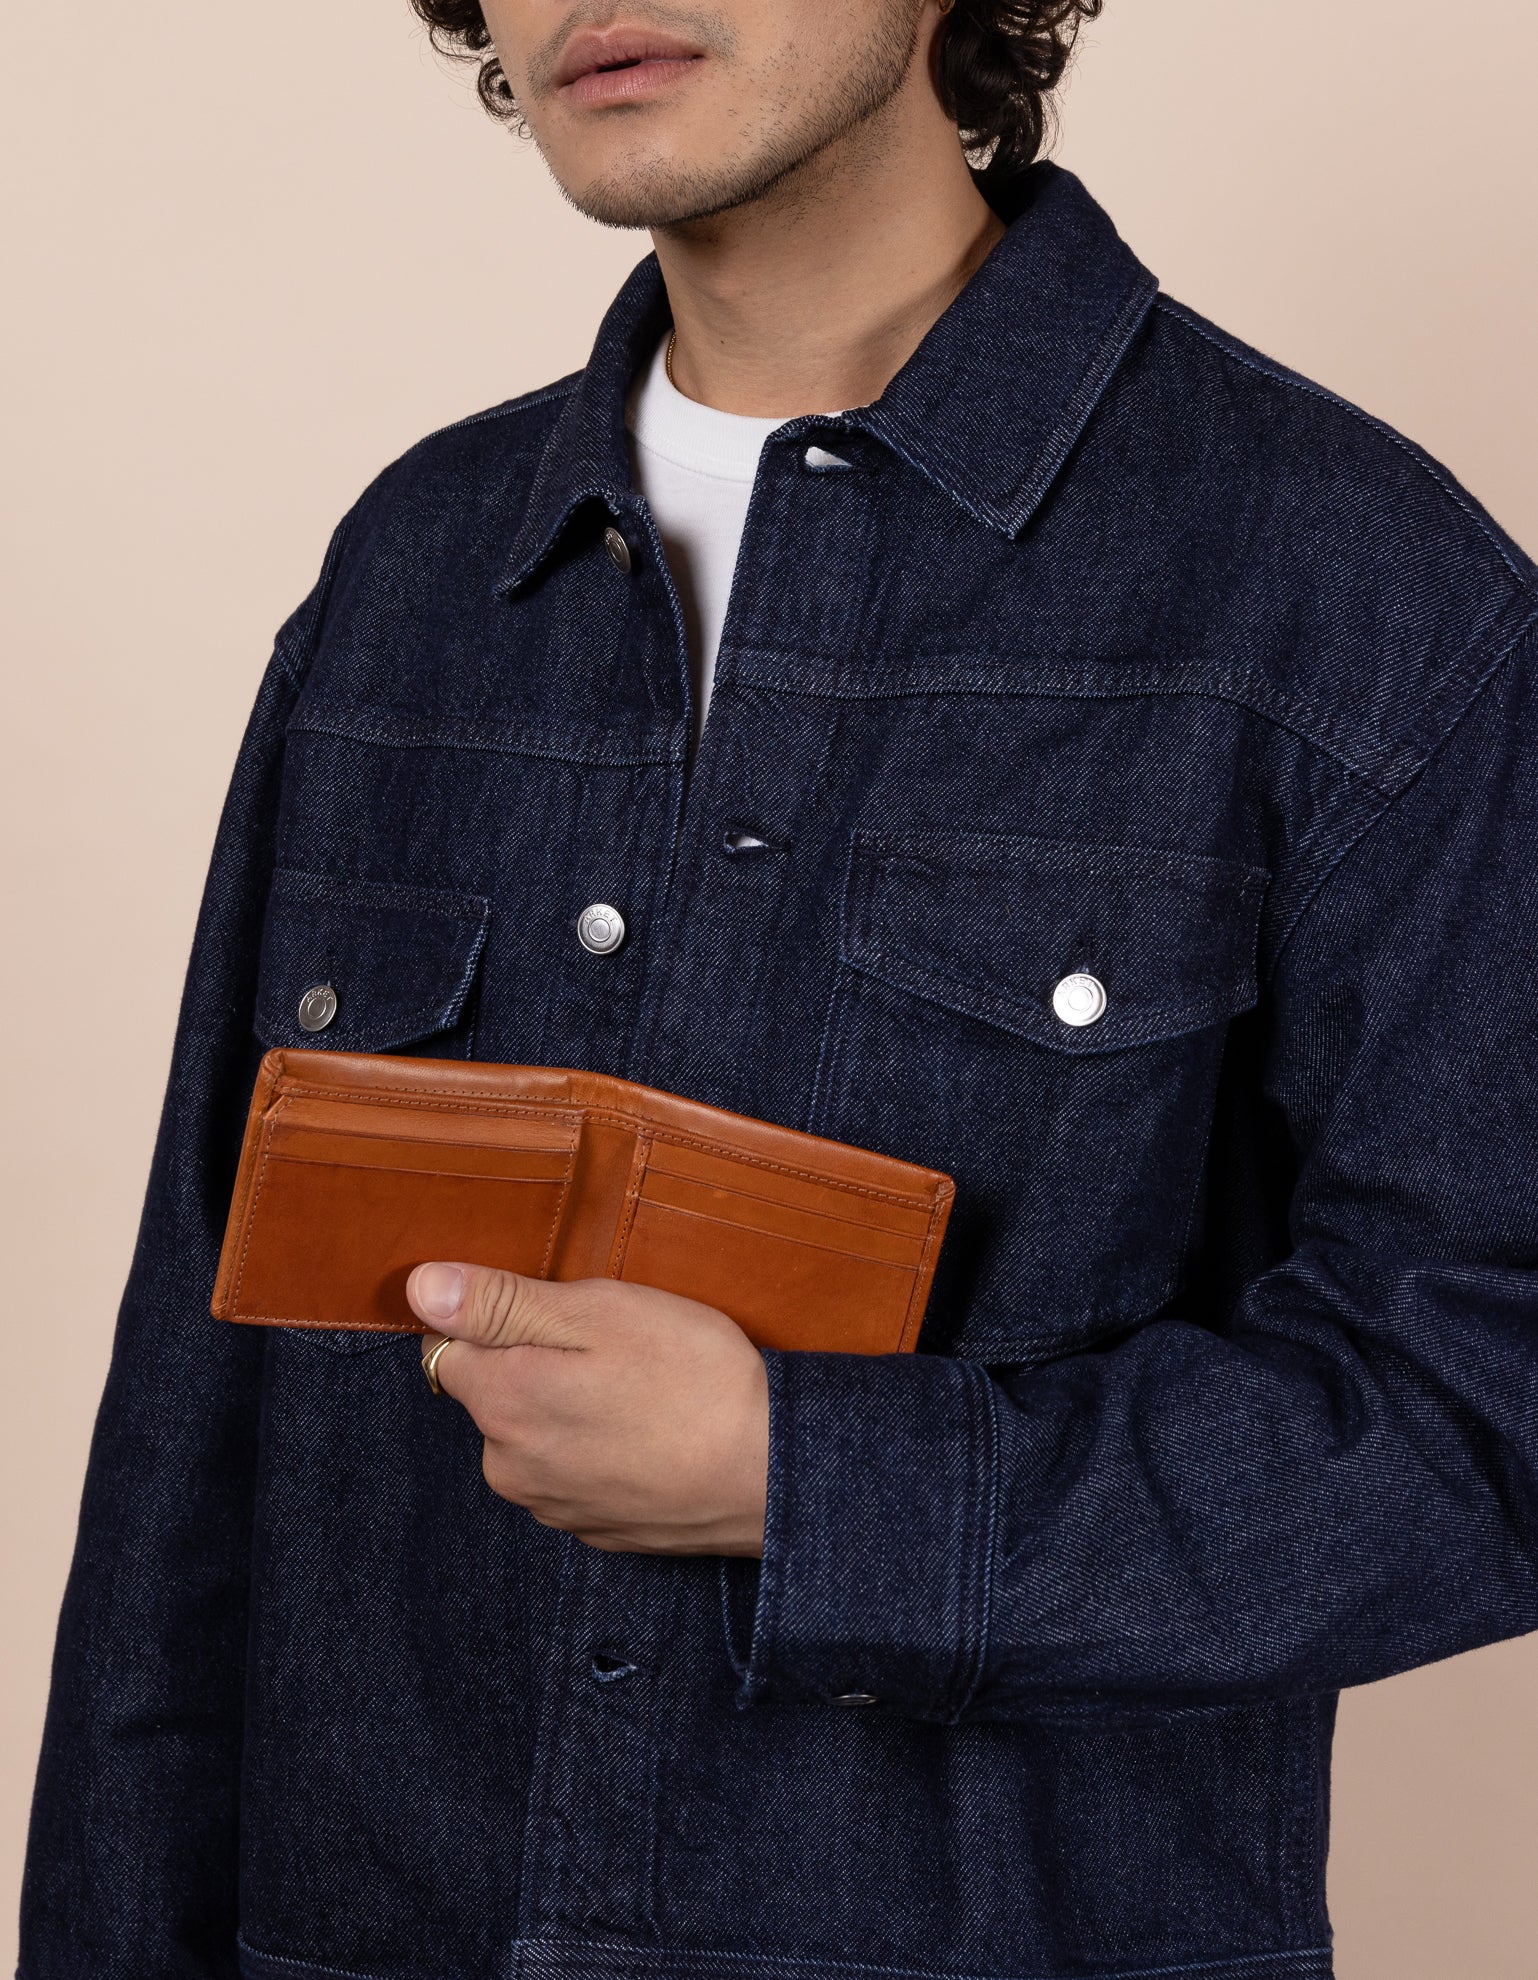 Joshua cognac leather wallet. Male model image.